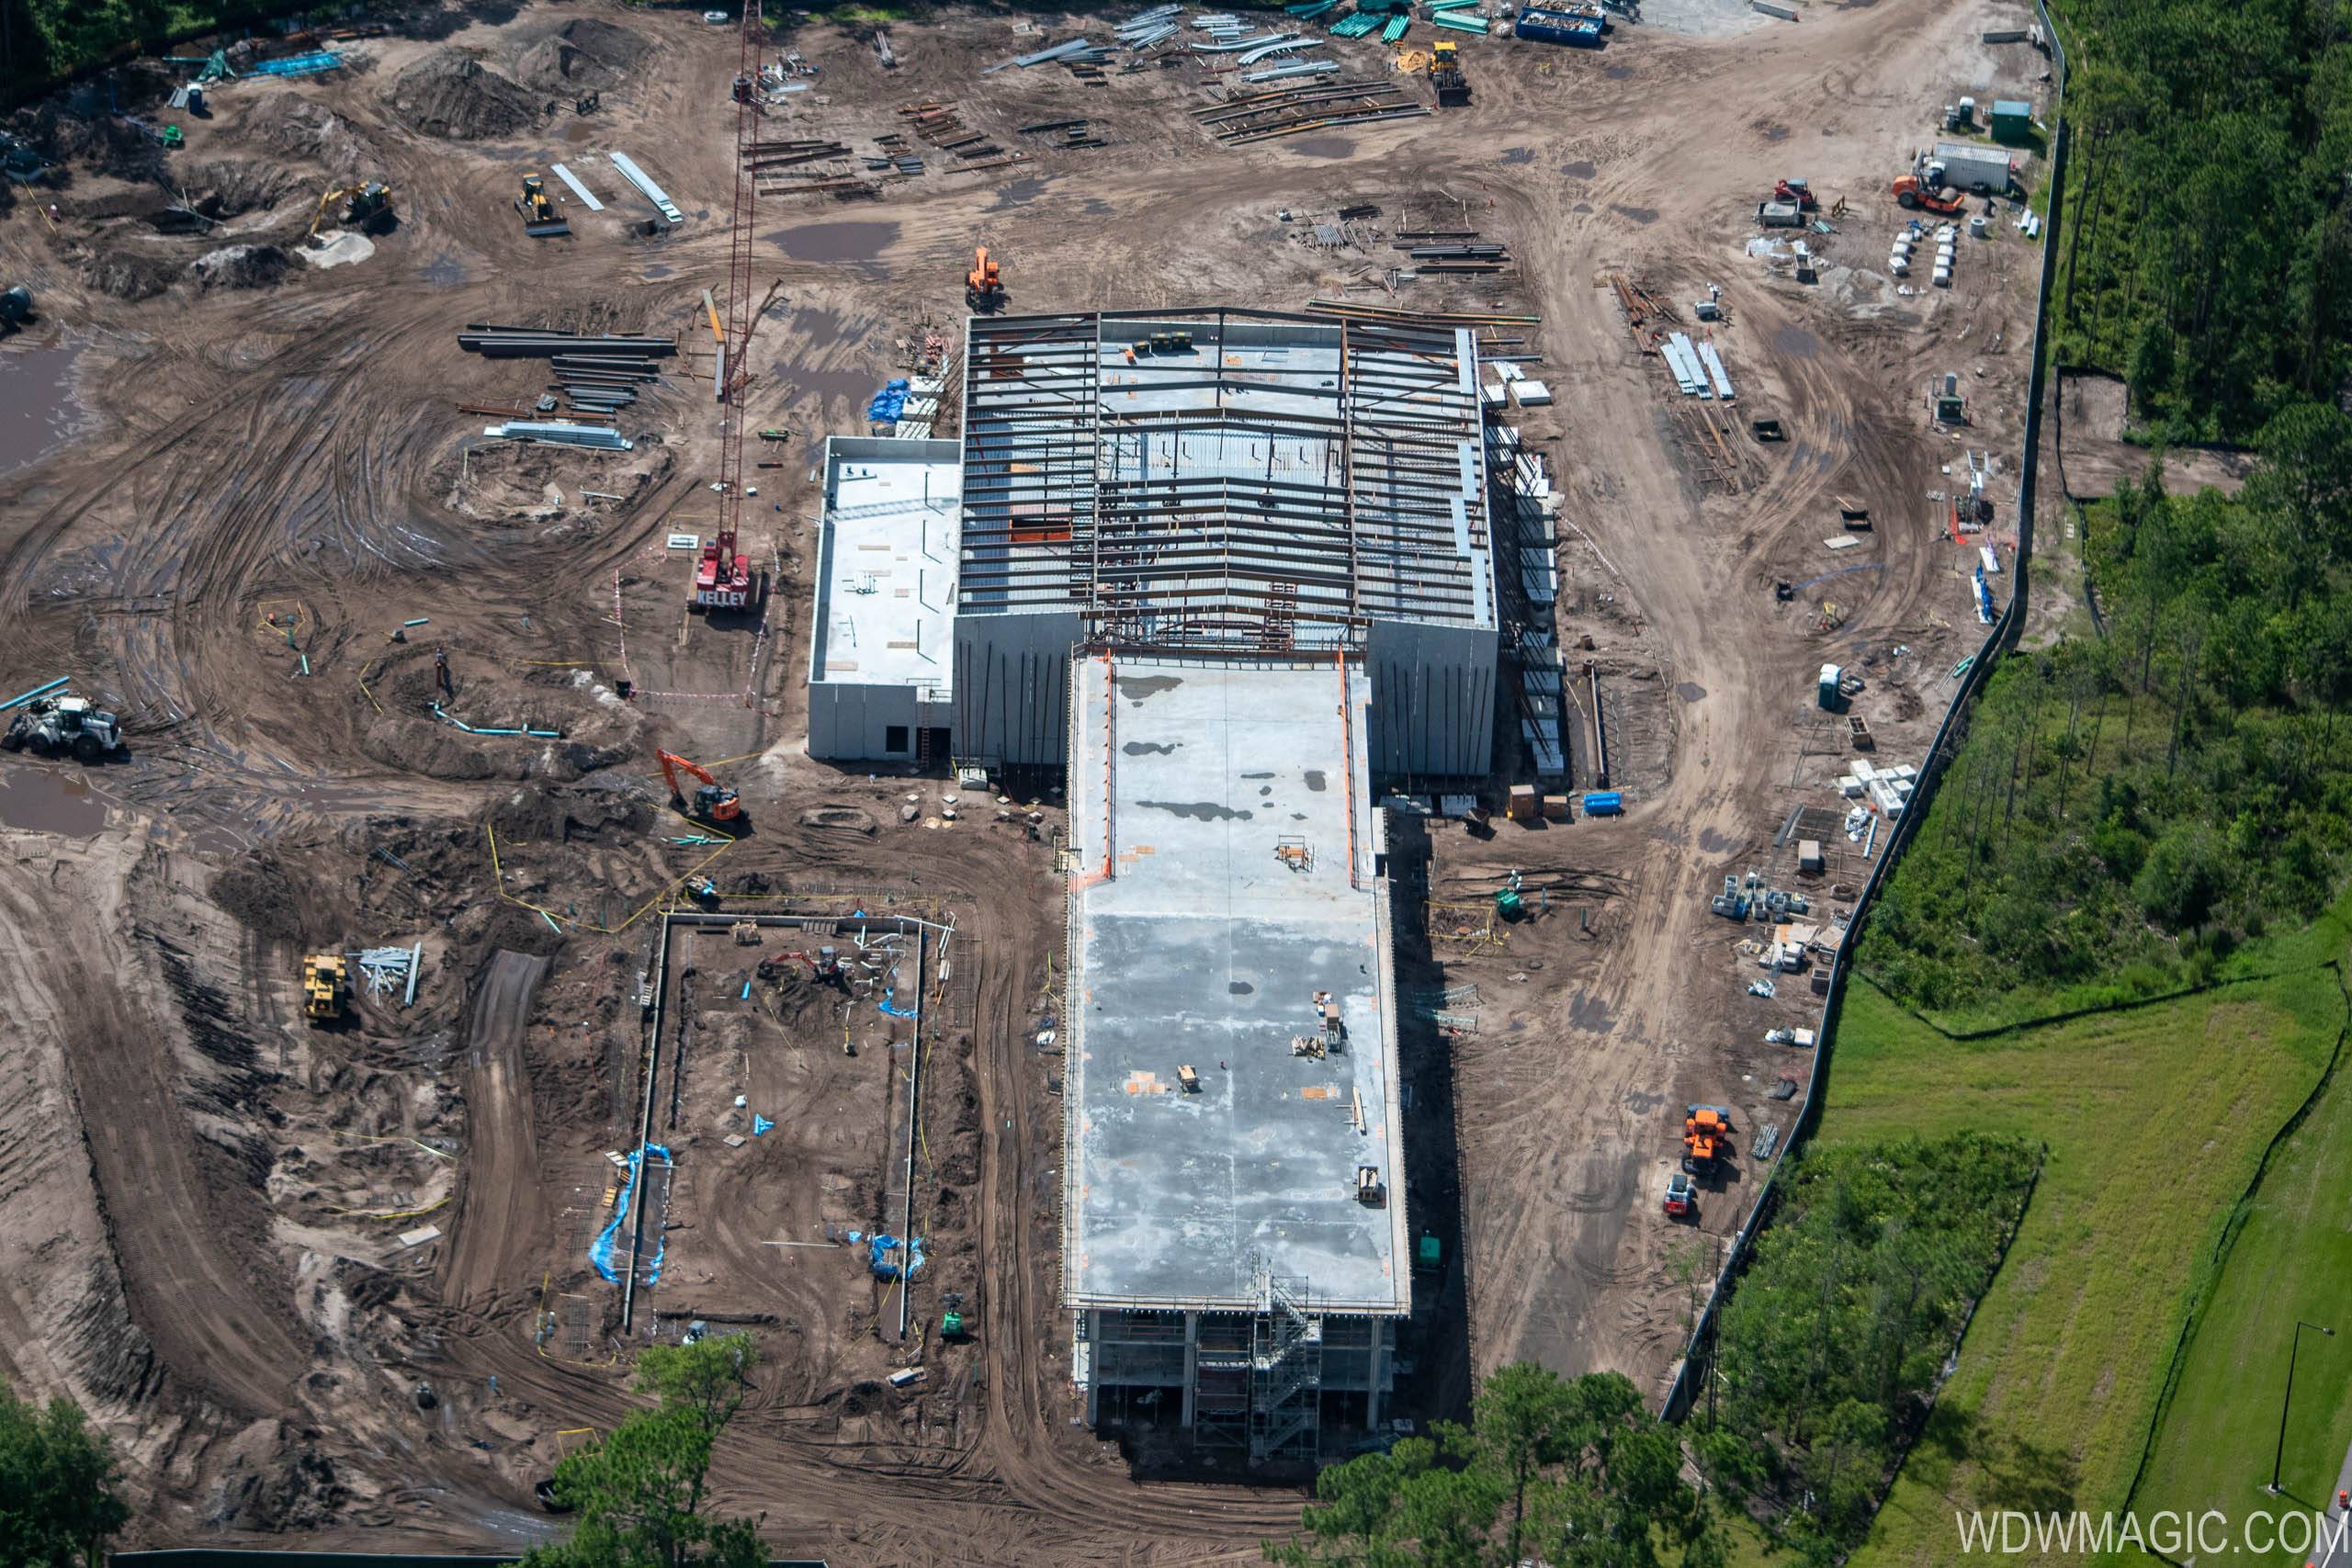 Star Wars hotel construction at Walt Disney World - July 2019